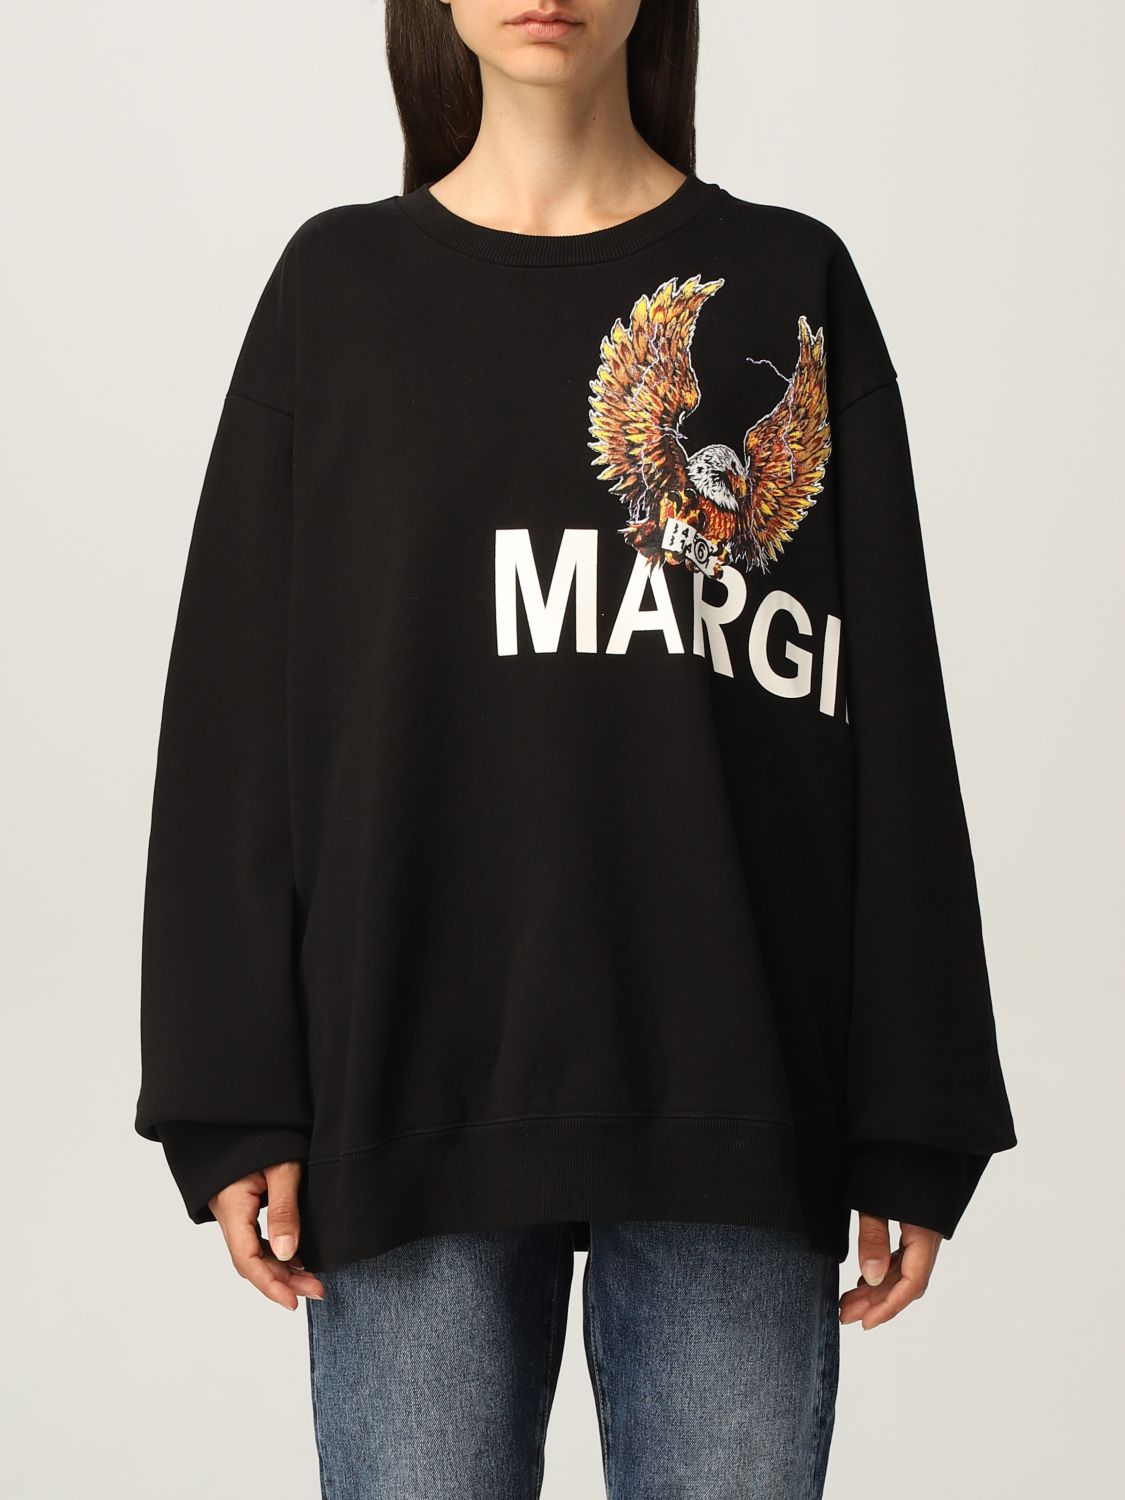 MM6 MAISON MARGIELA: sweatshirt with eagle print | Sweatshirt Mm6 